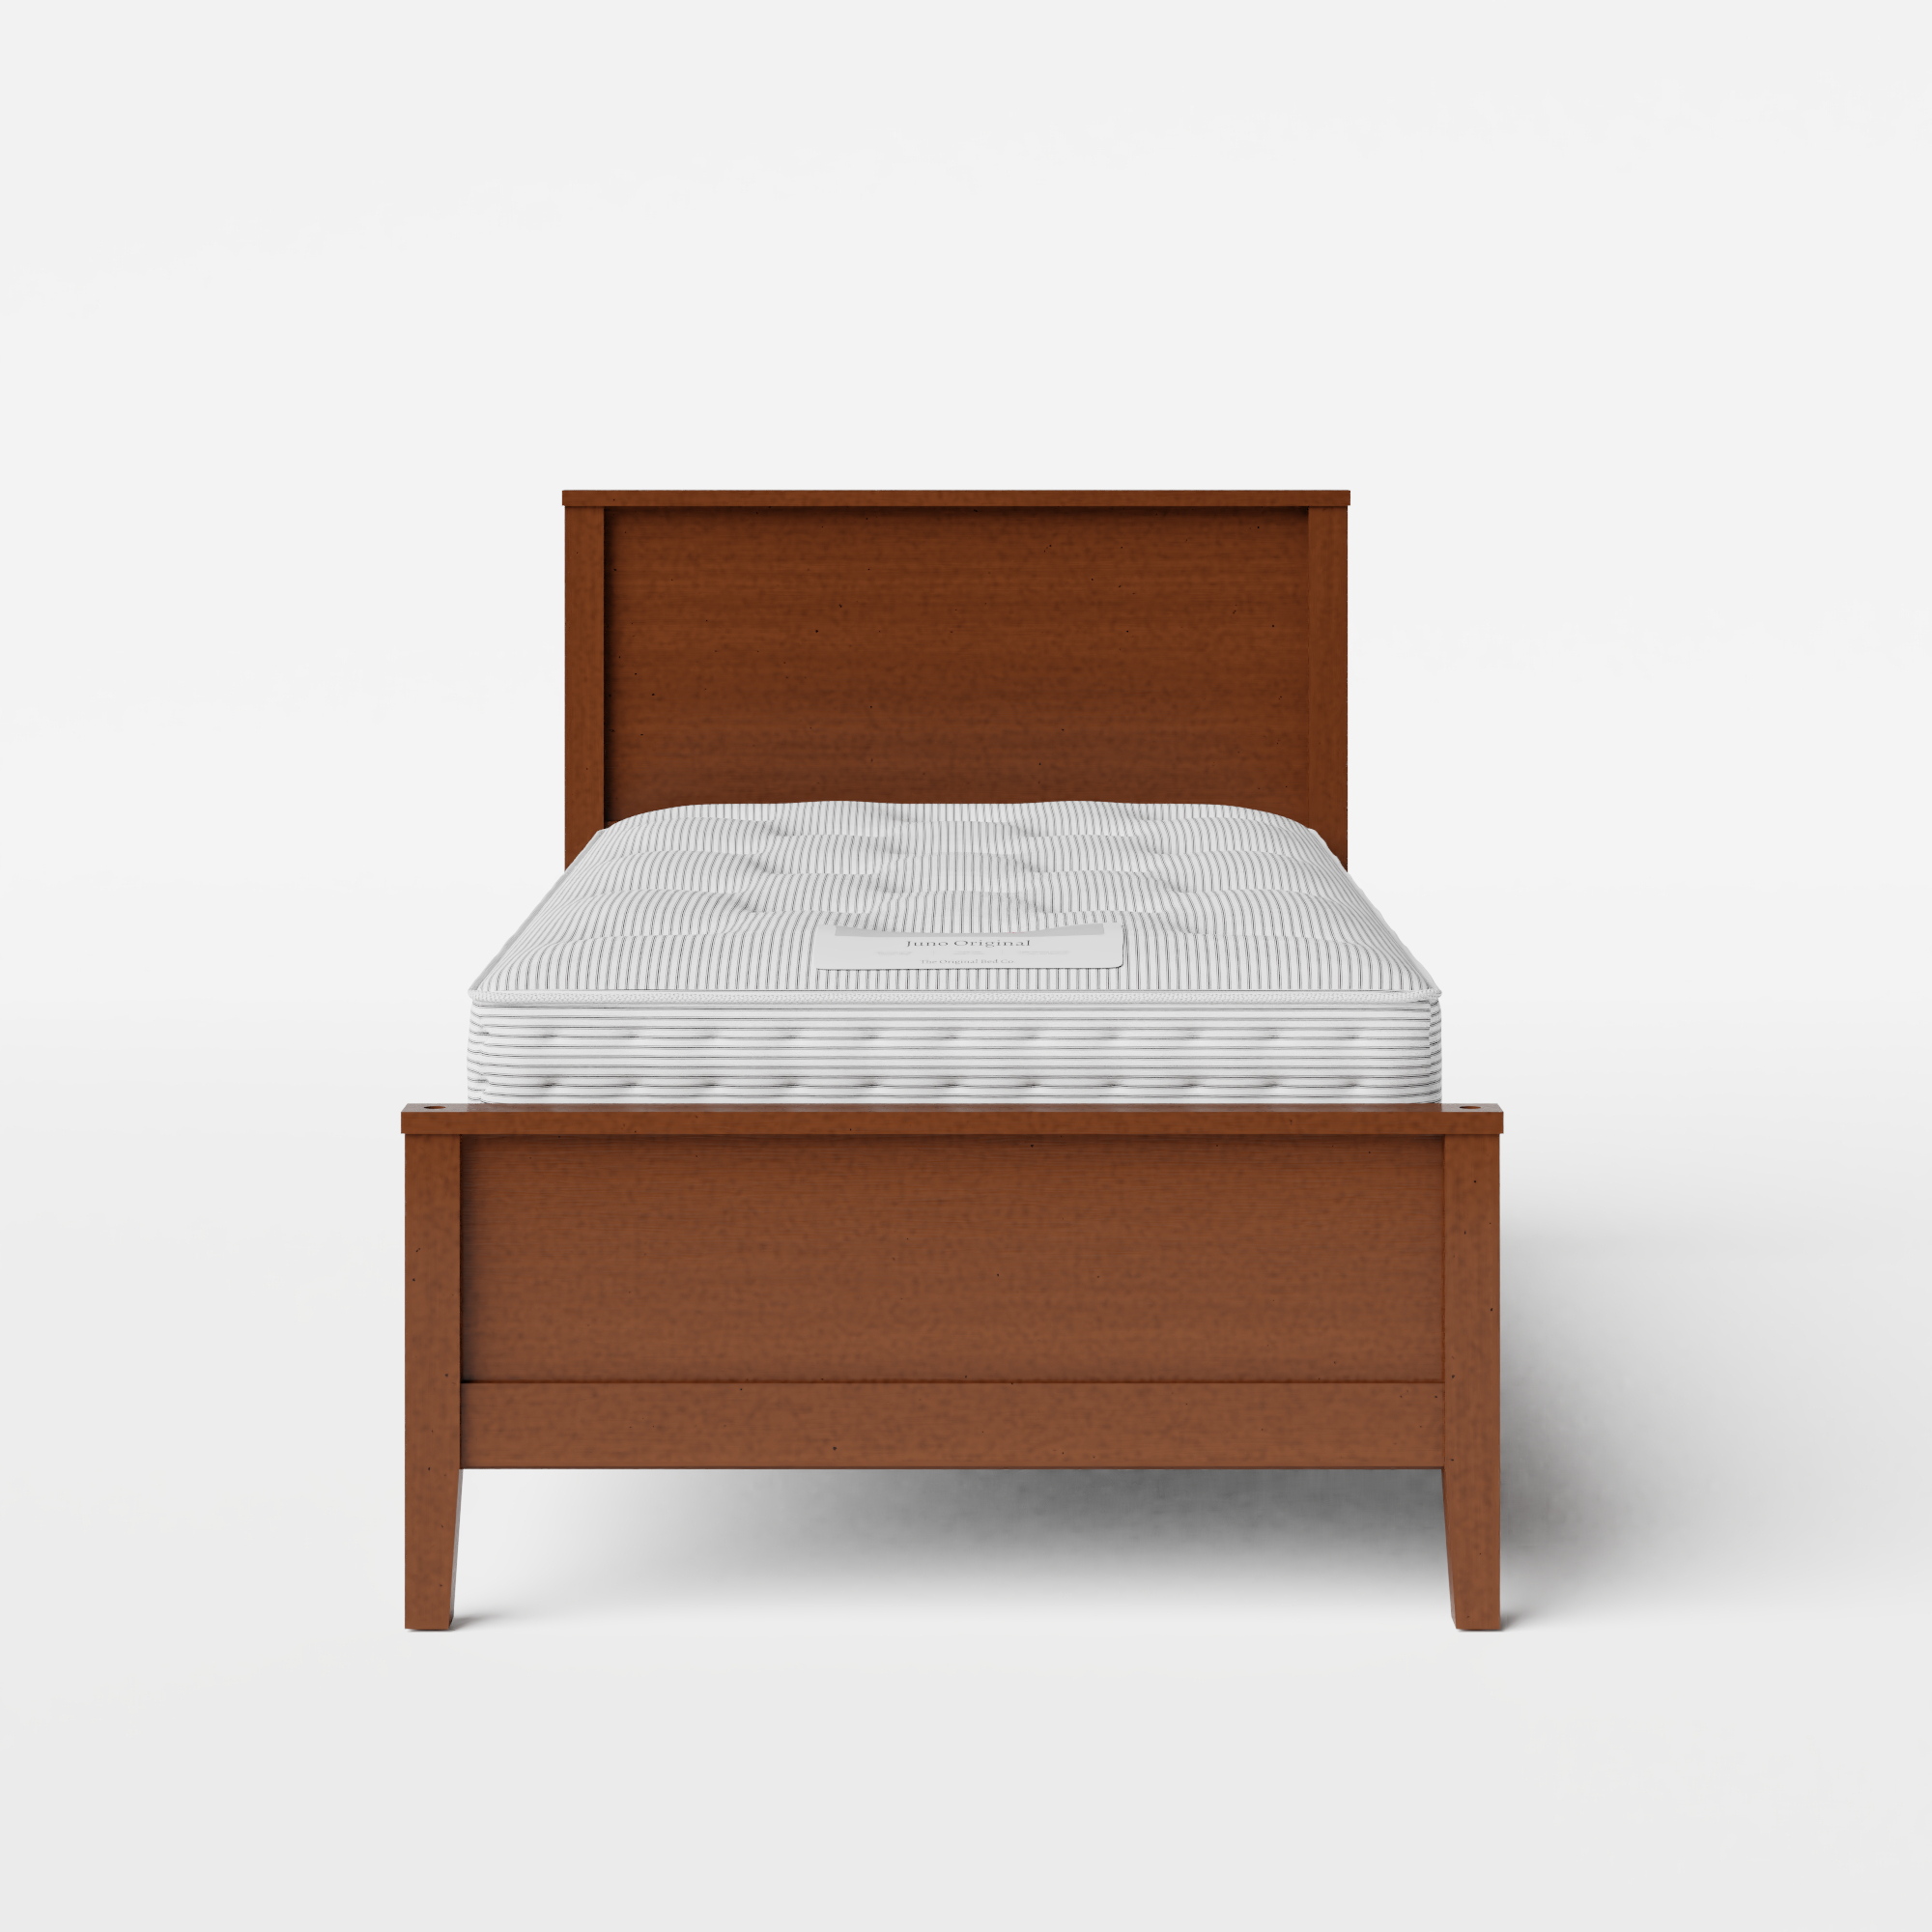 Ramsay single wood bed in dark cherry with Juno mattress